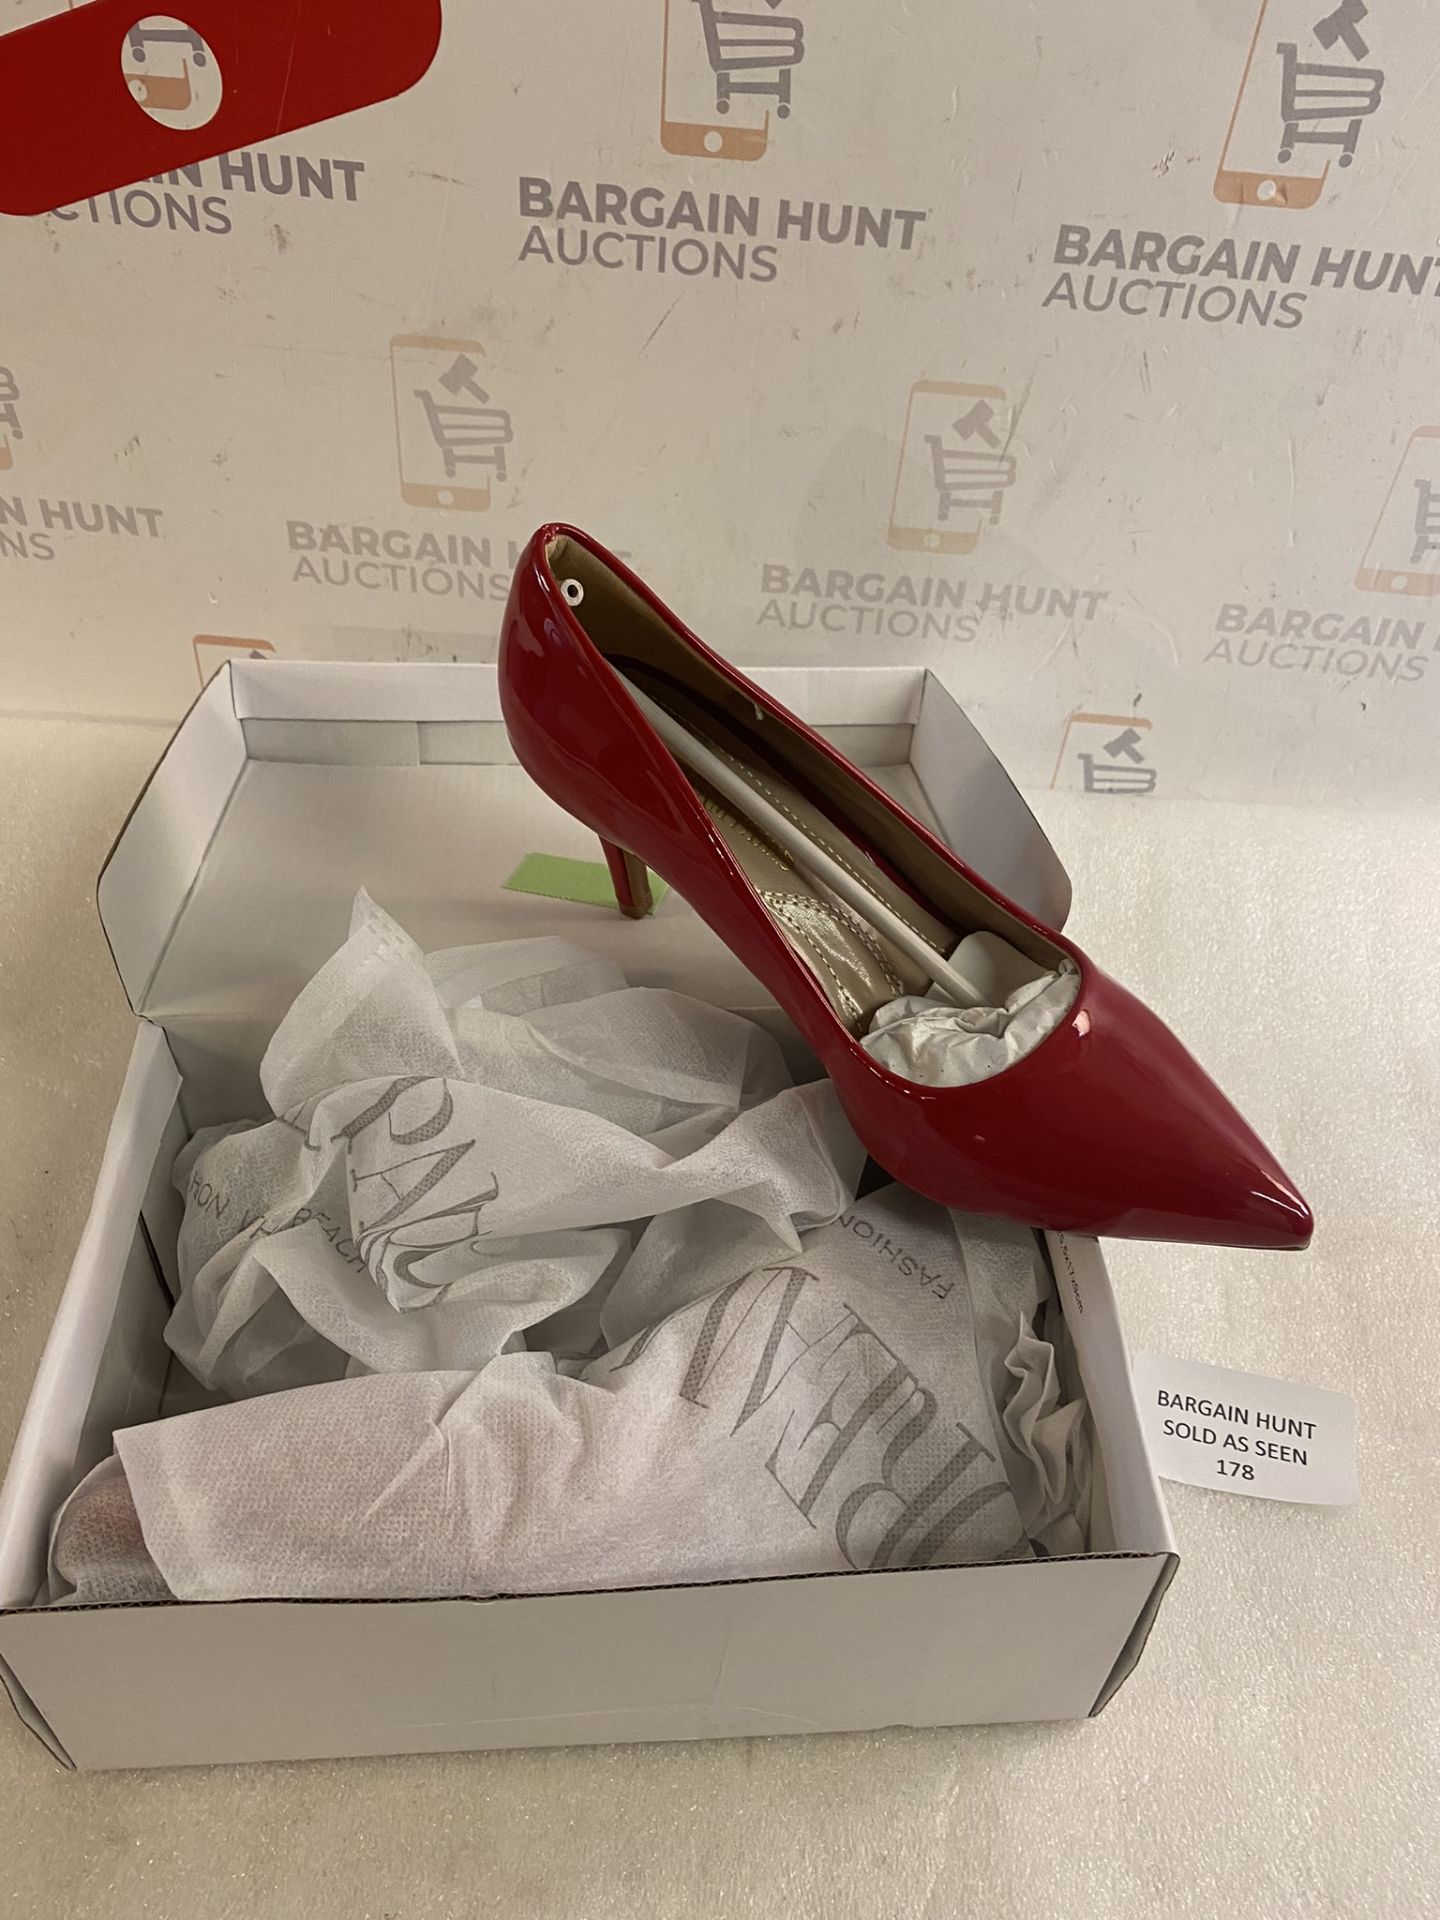 DreamPairs Kucci High Heel Ladies Shoes - Red, 7 UK